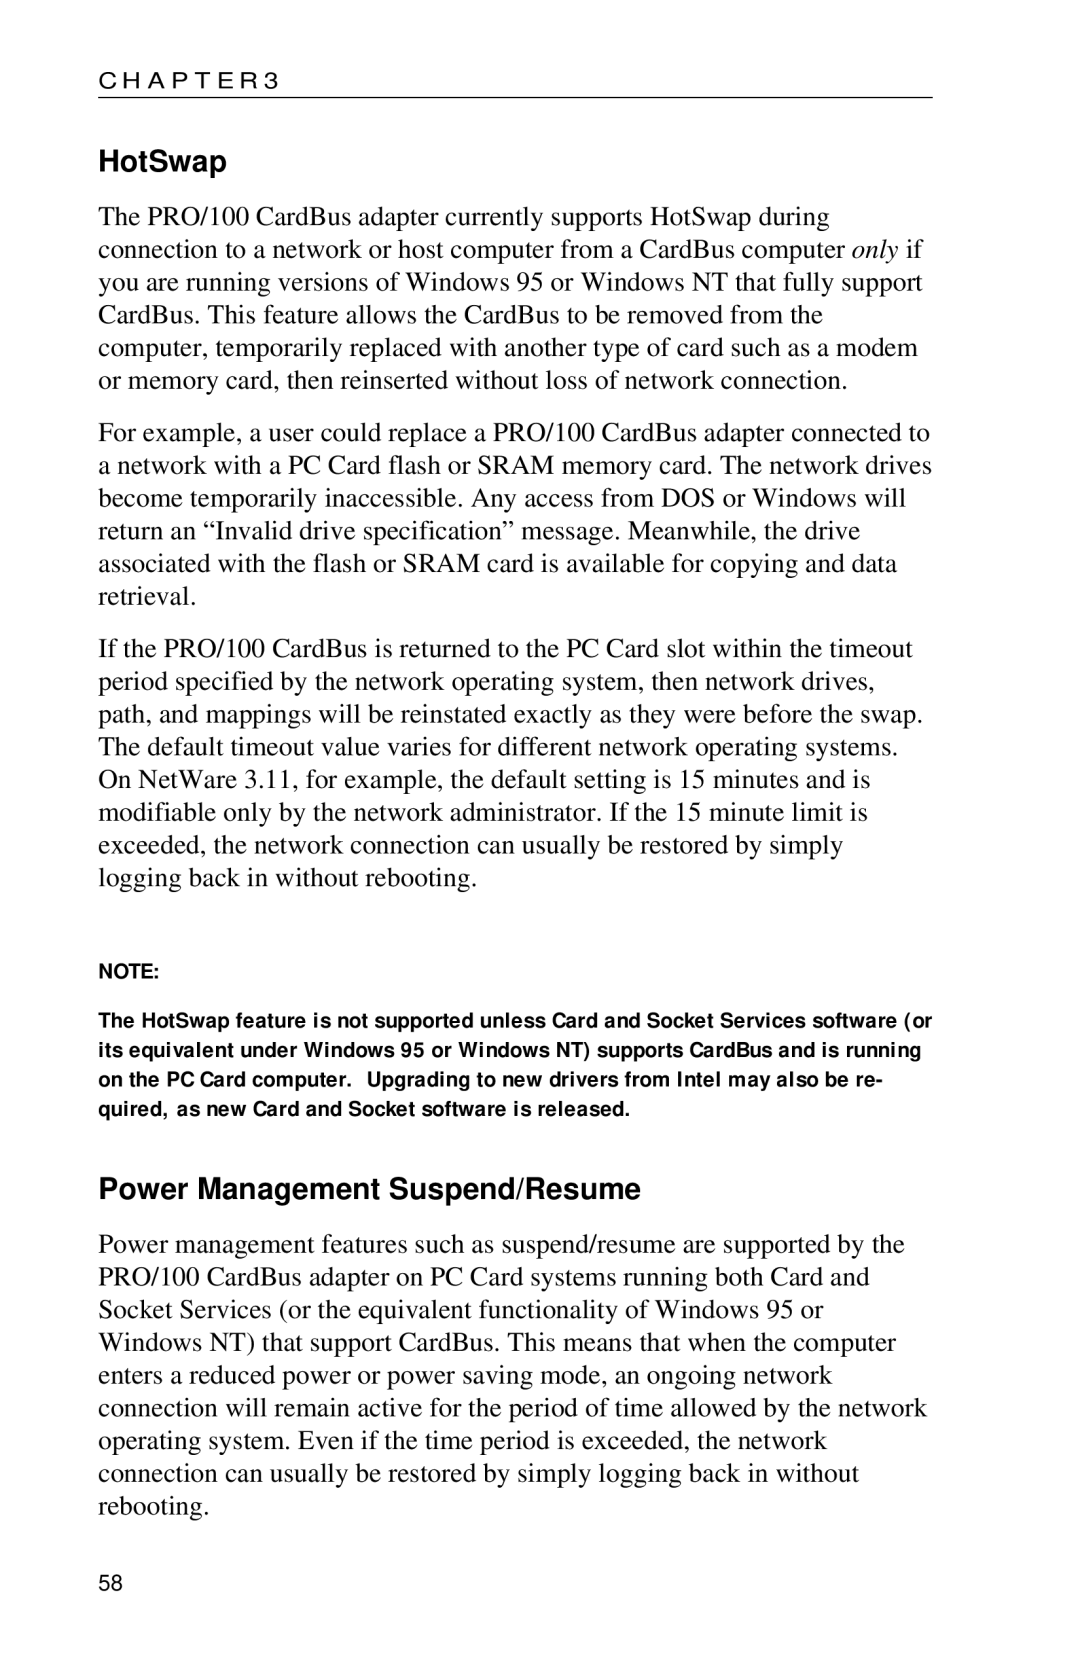 Intel PRO appendix HotSwap, Power Management Suspend/Resume 